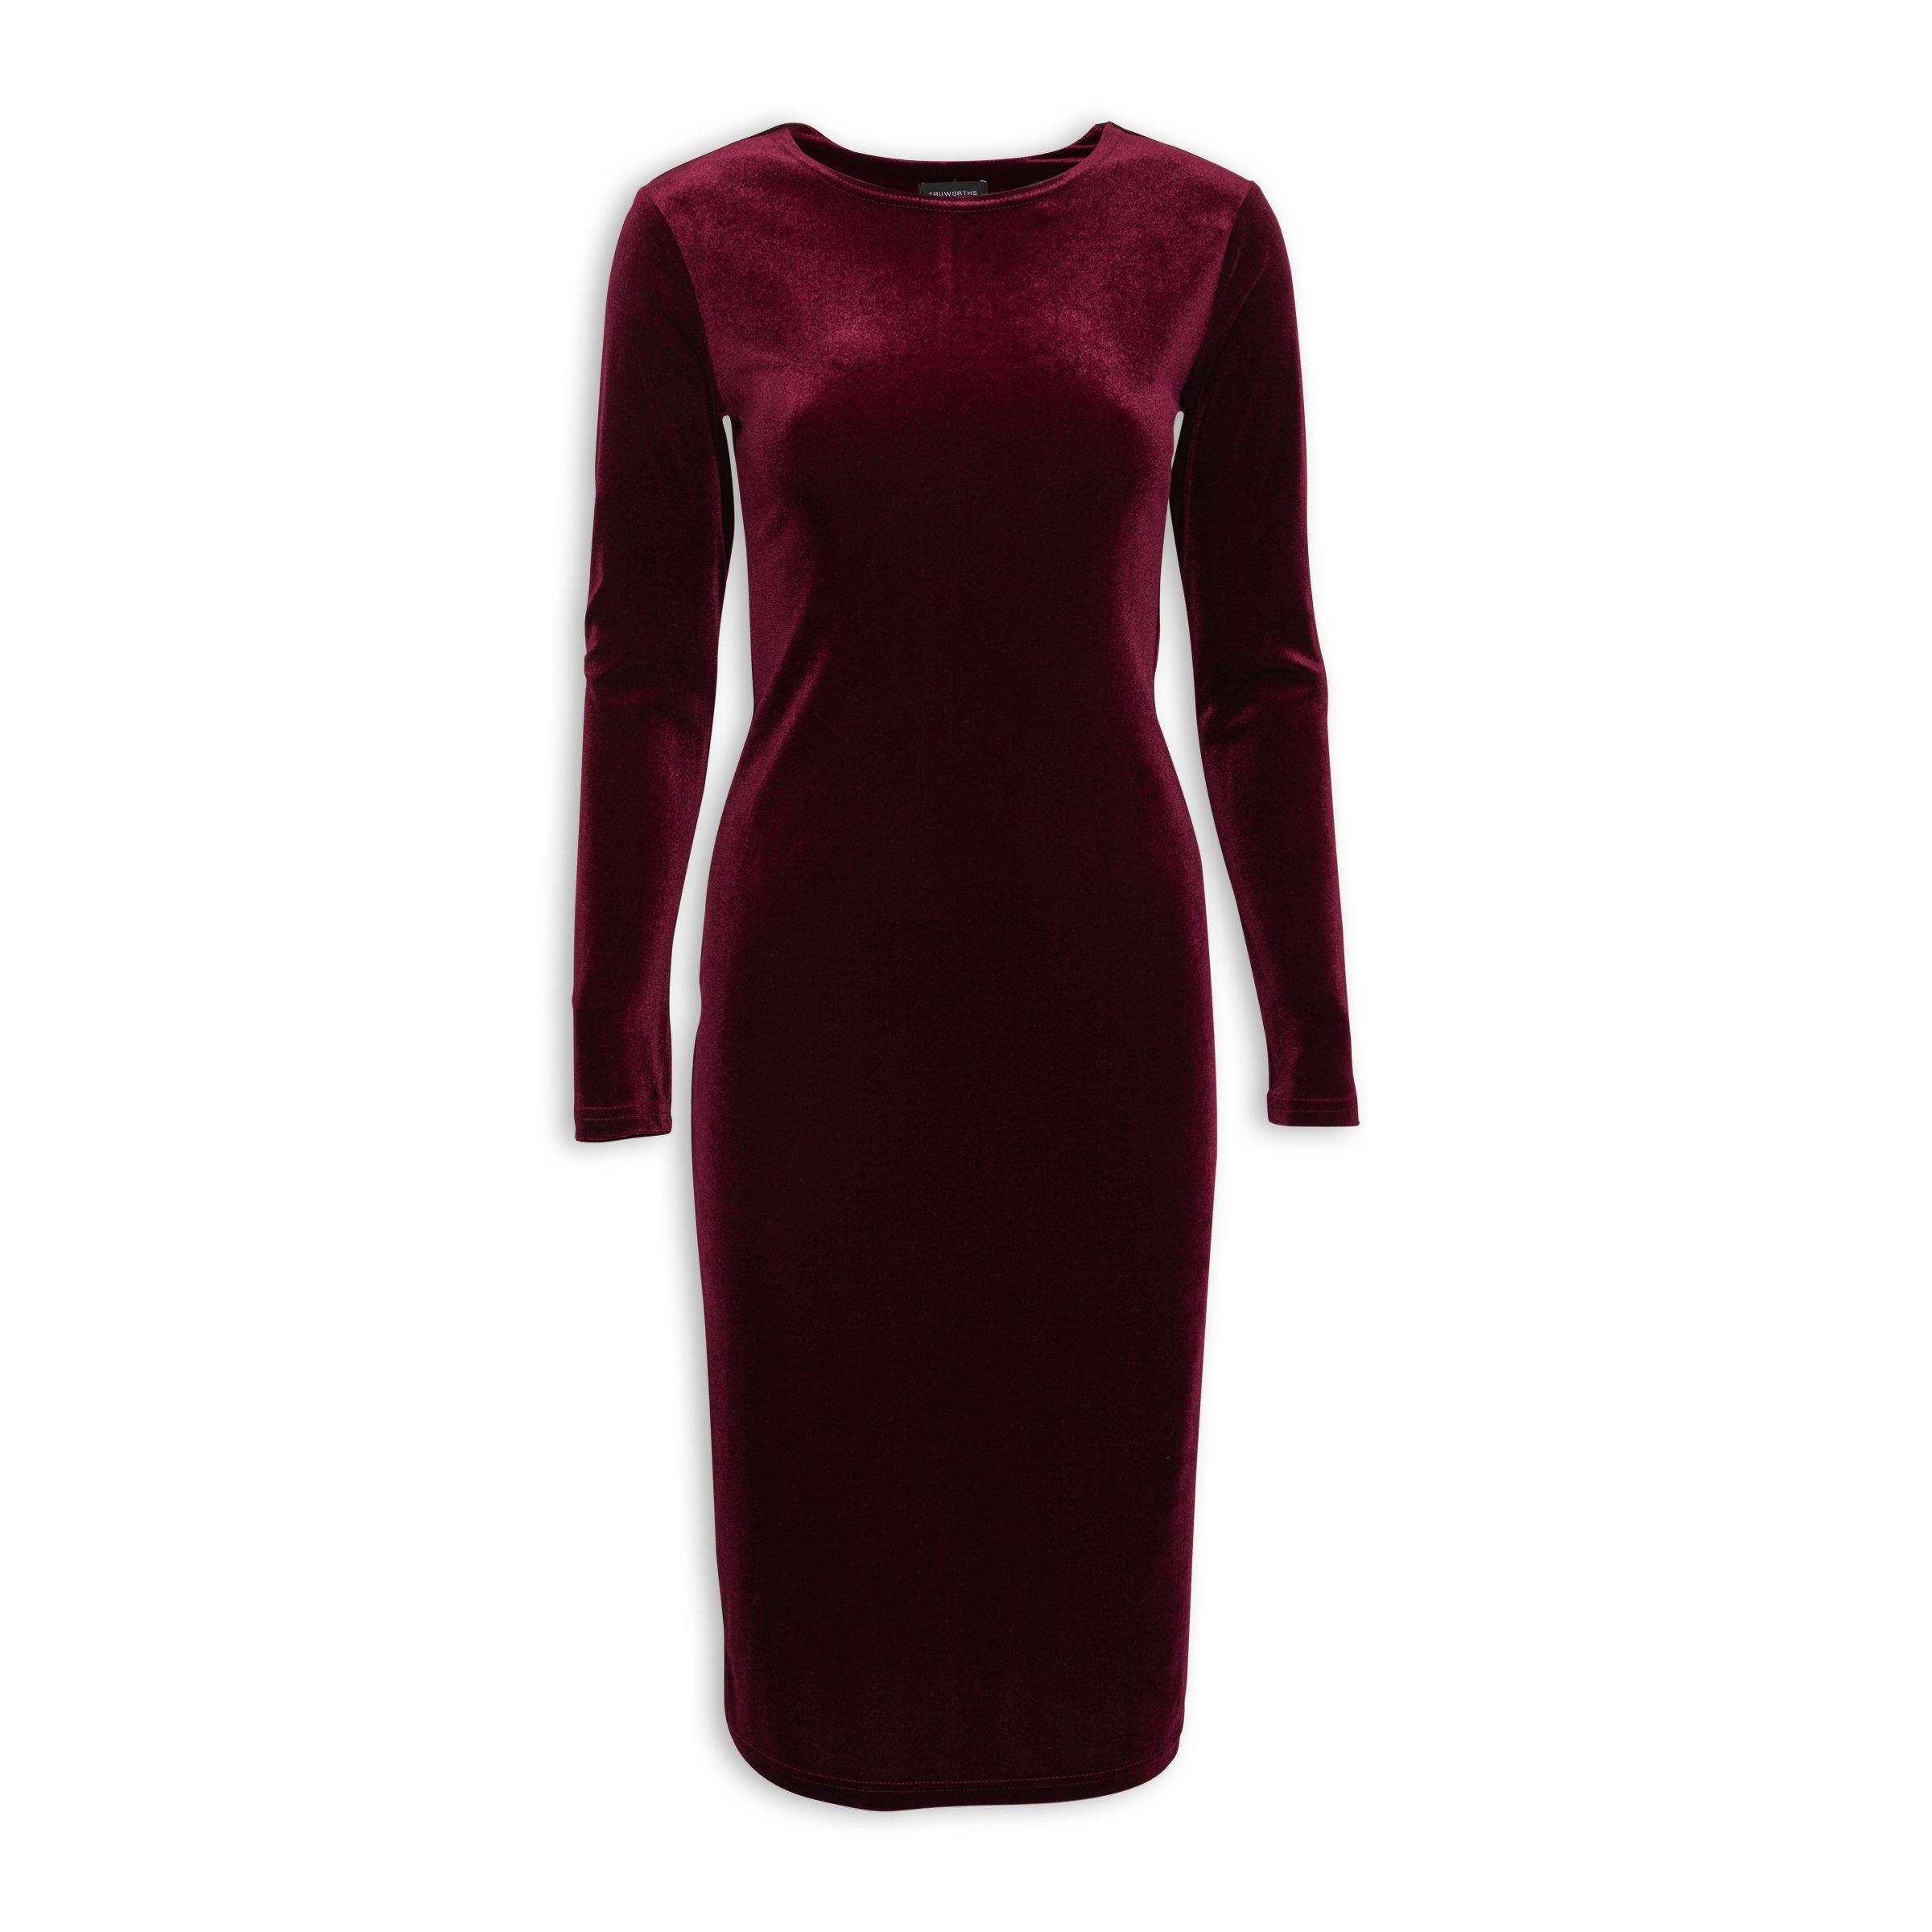 Buy Truworths Burgundy Velour Dress Online | Truworths